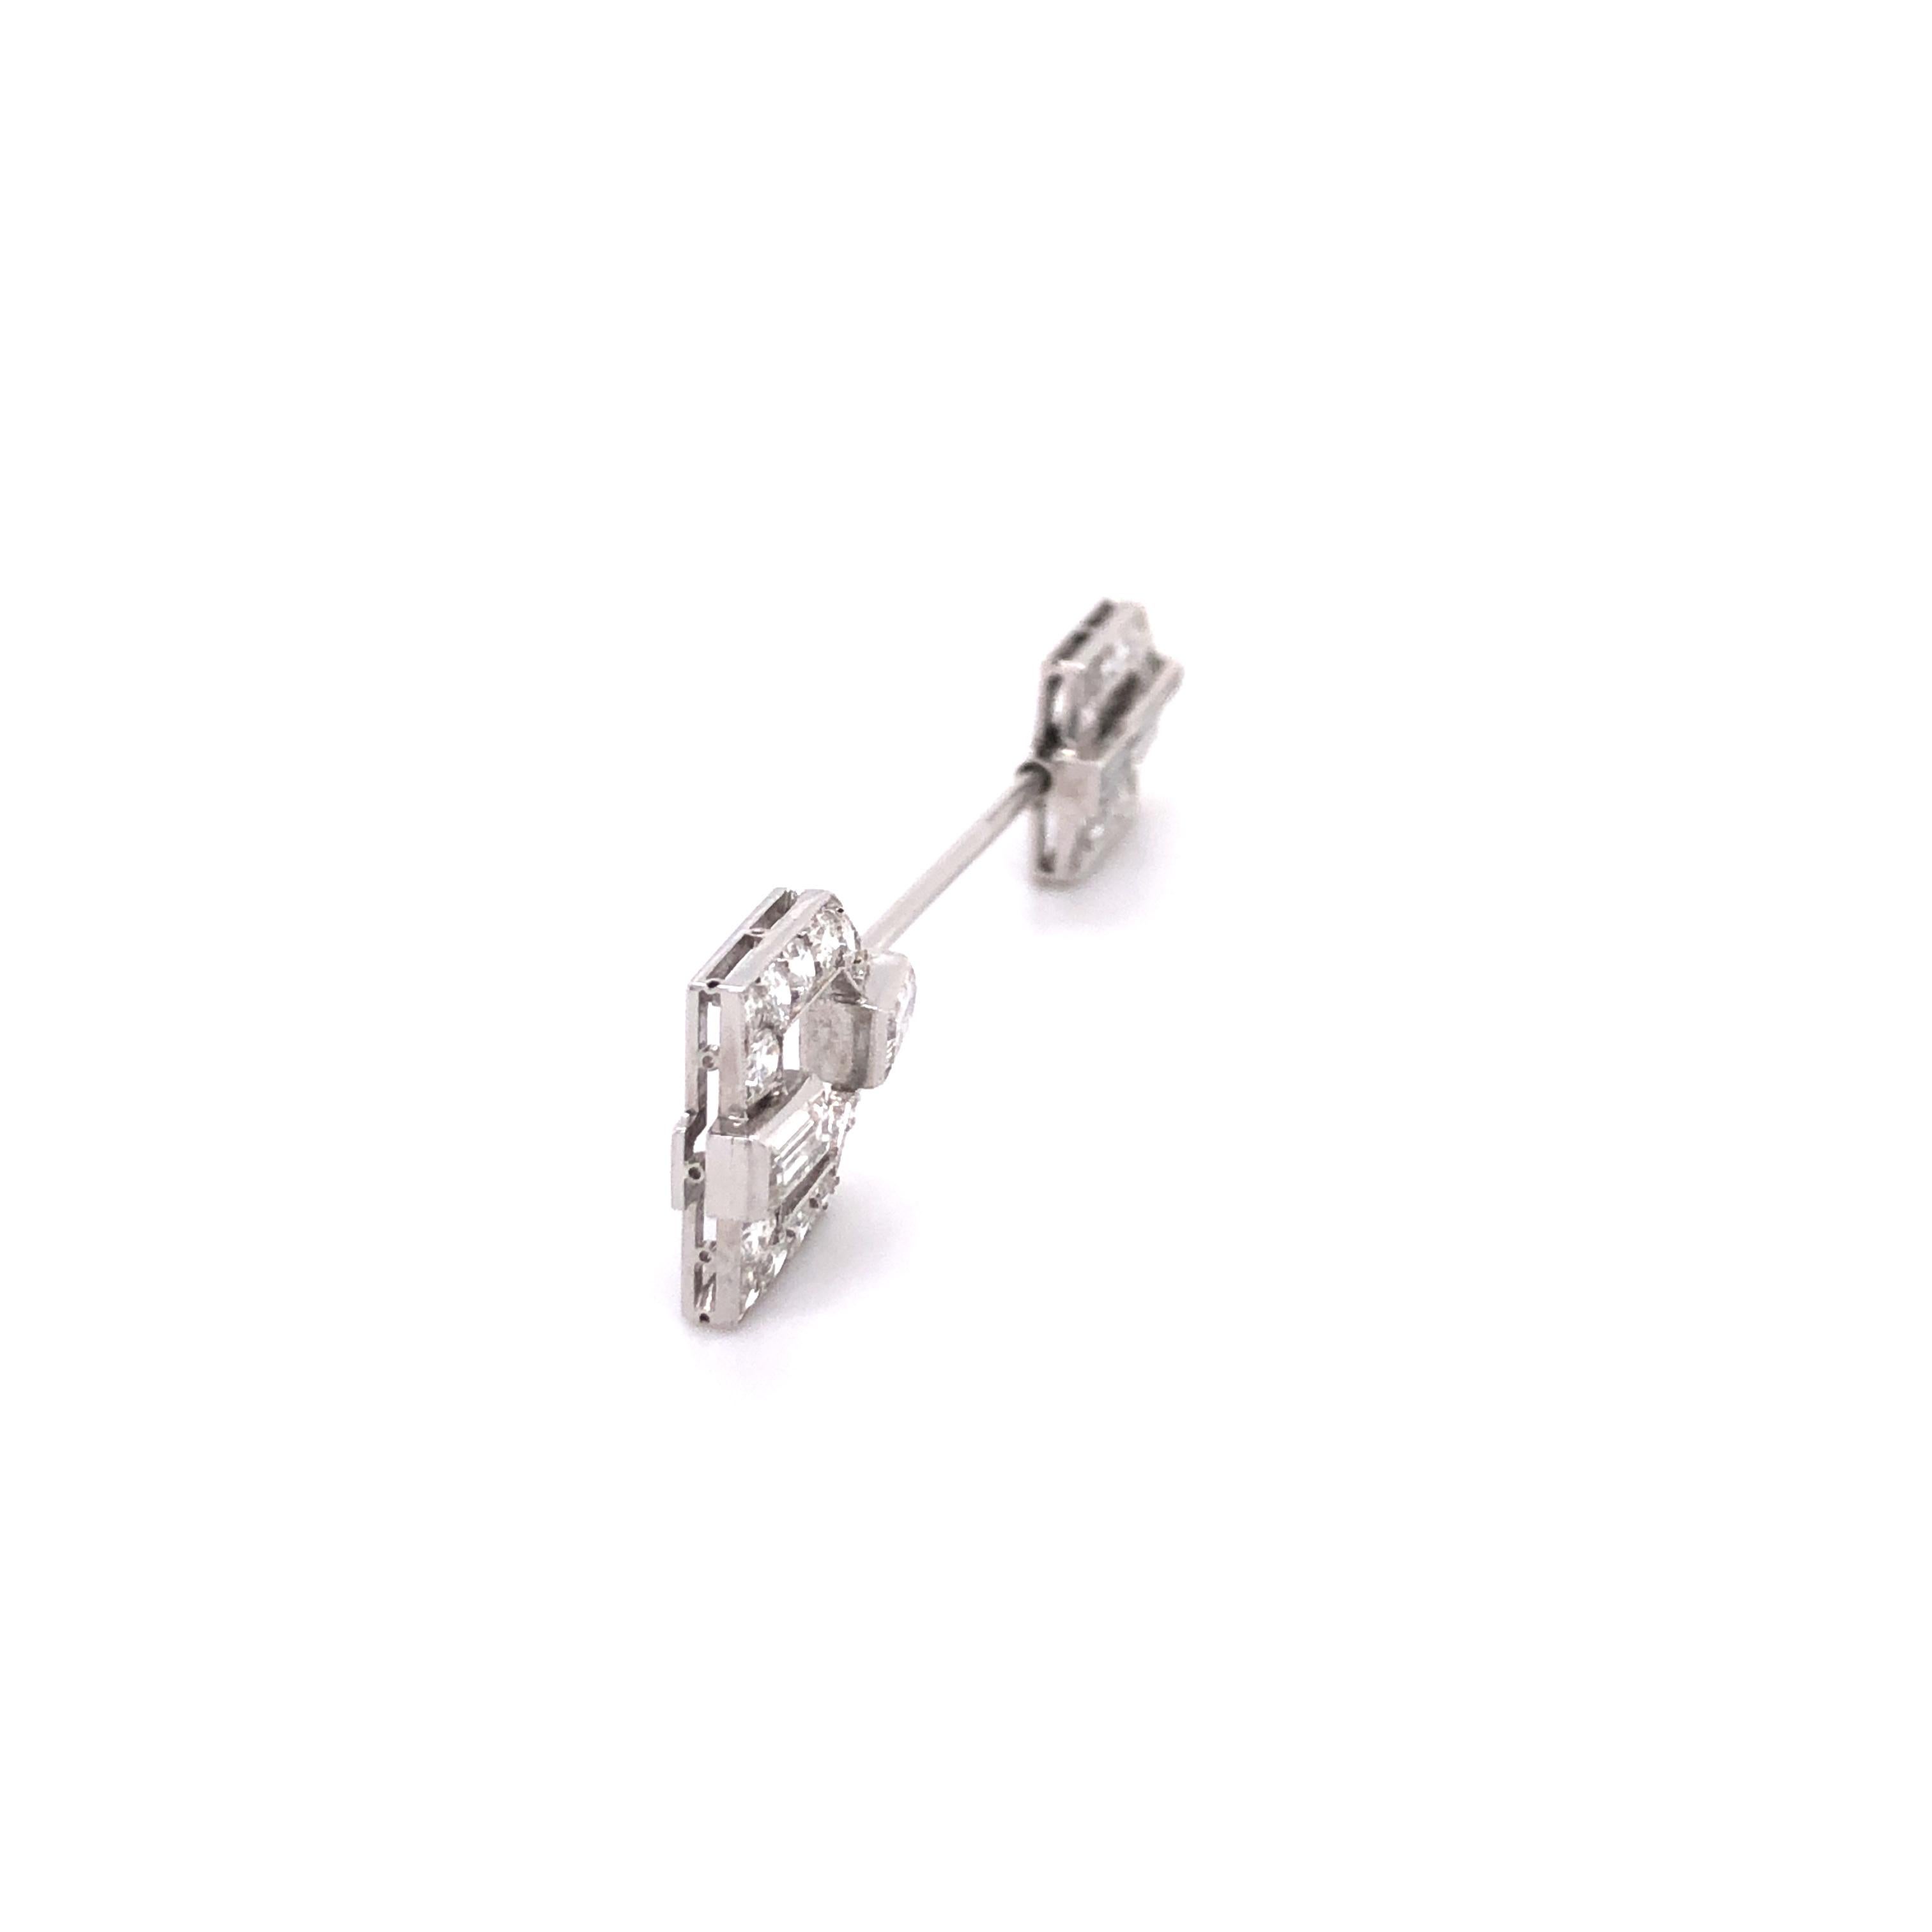 Art Deco Jabot Pin with Diamonds in Platinum and 18 Karat White Gold 3